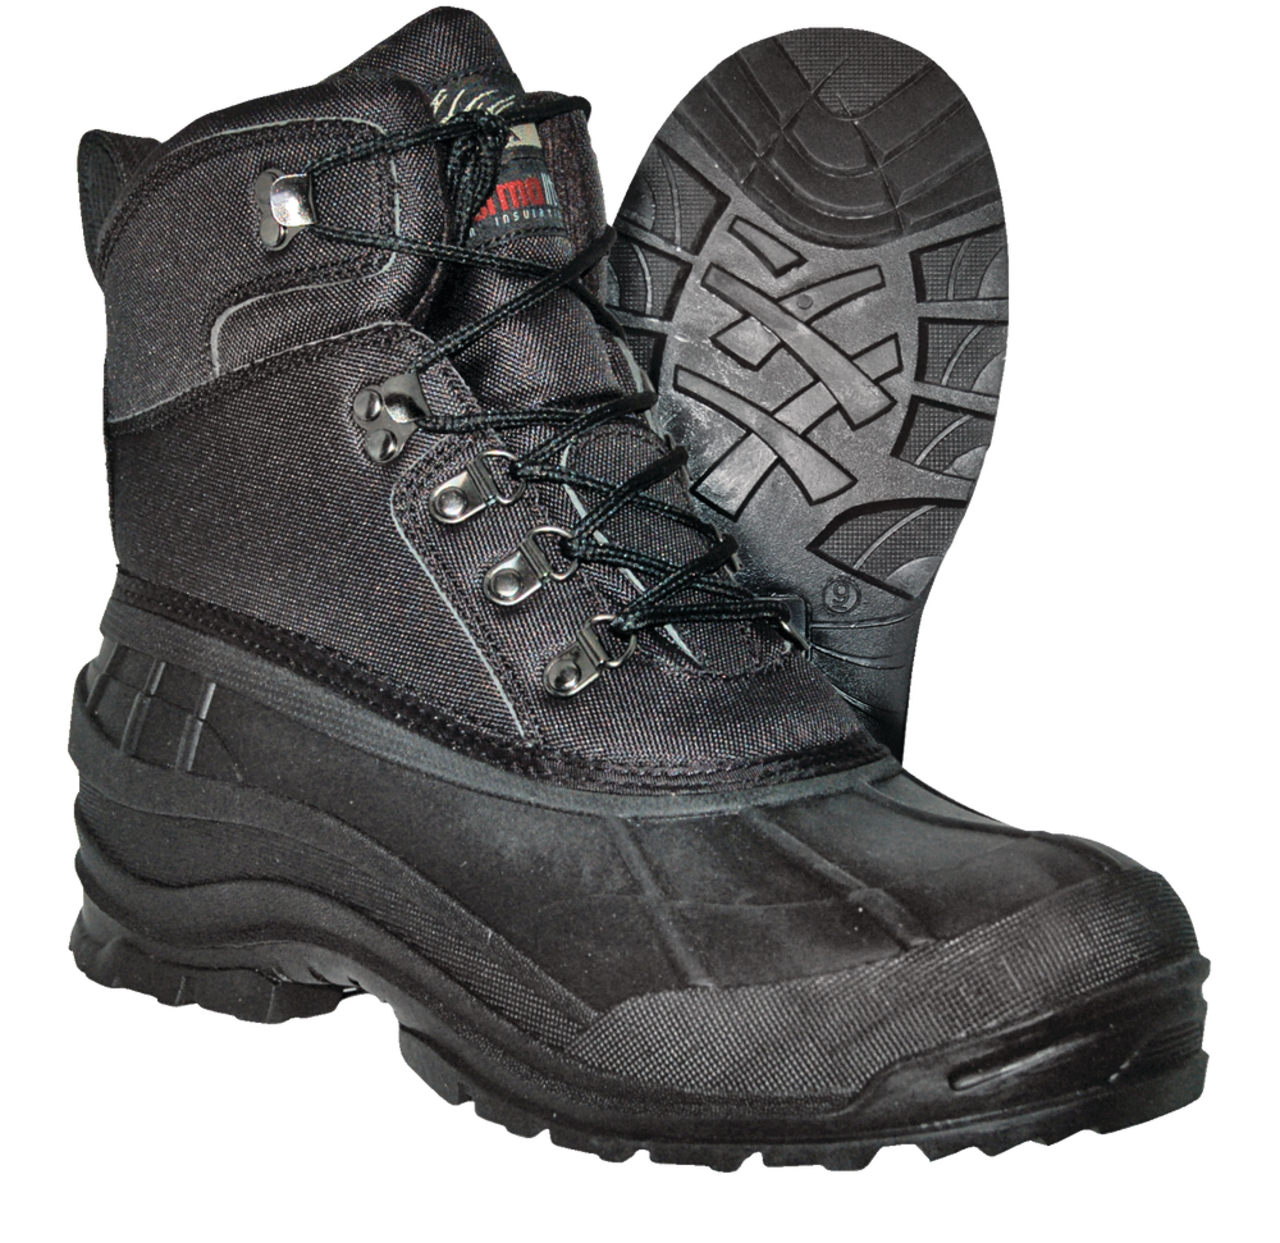 Under Armour Men's Base 4.0 Leggings, Black/Steel, Medium : :  Clothing, Shoes & Accessories